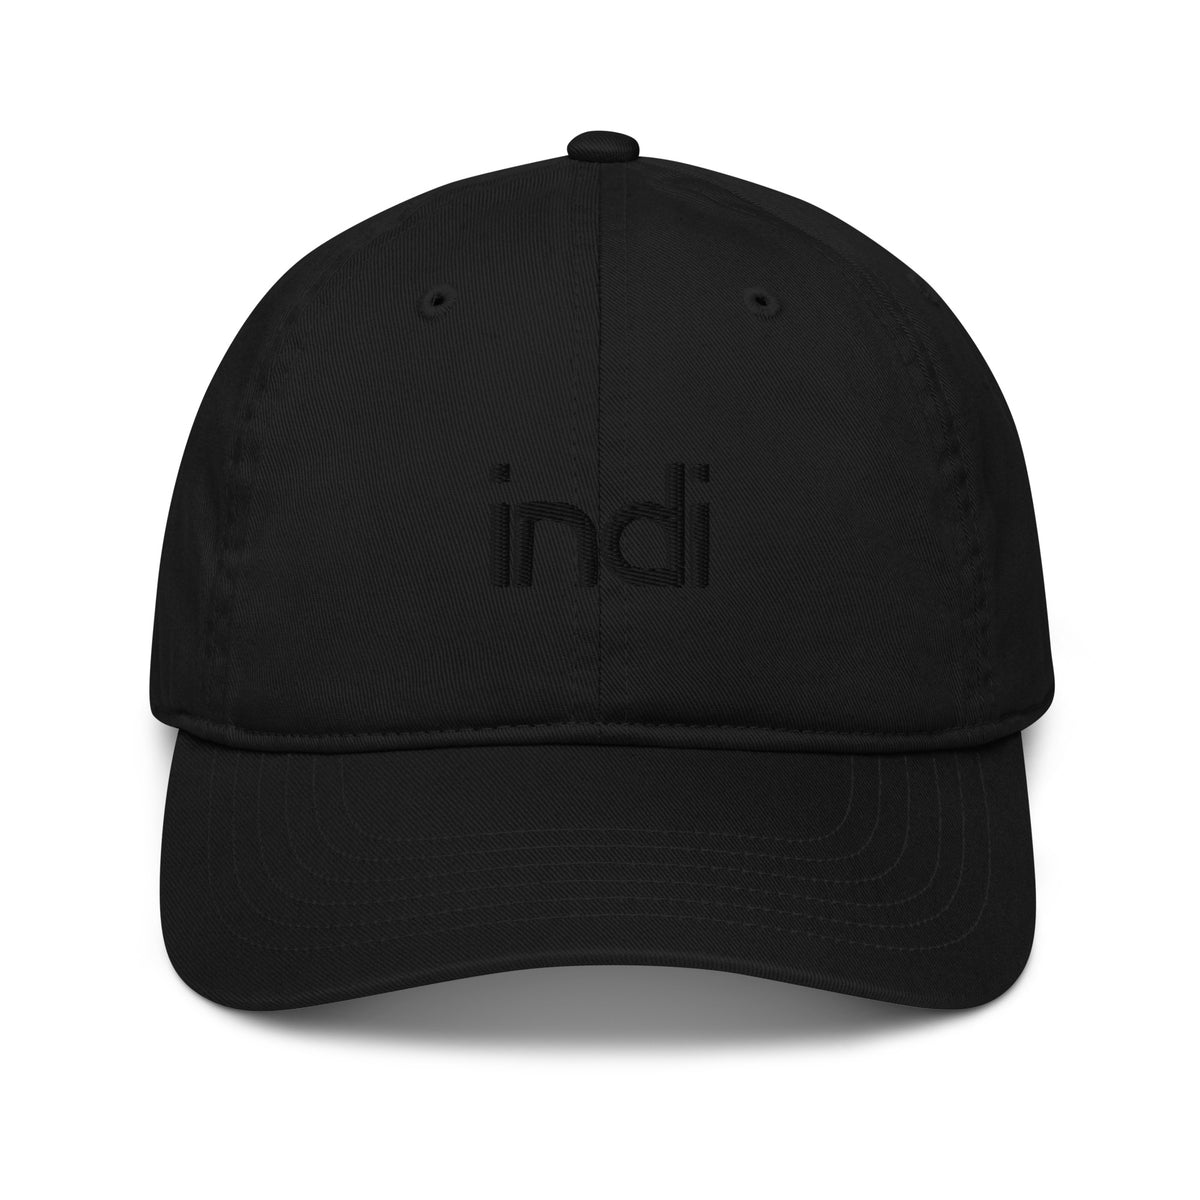 Black-on-Black Daily Hat